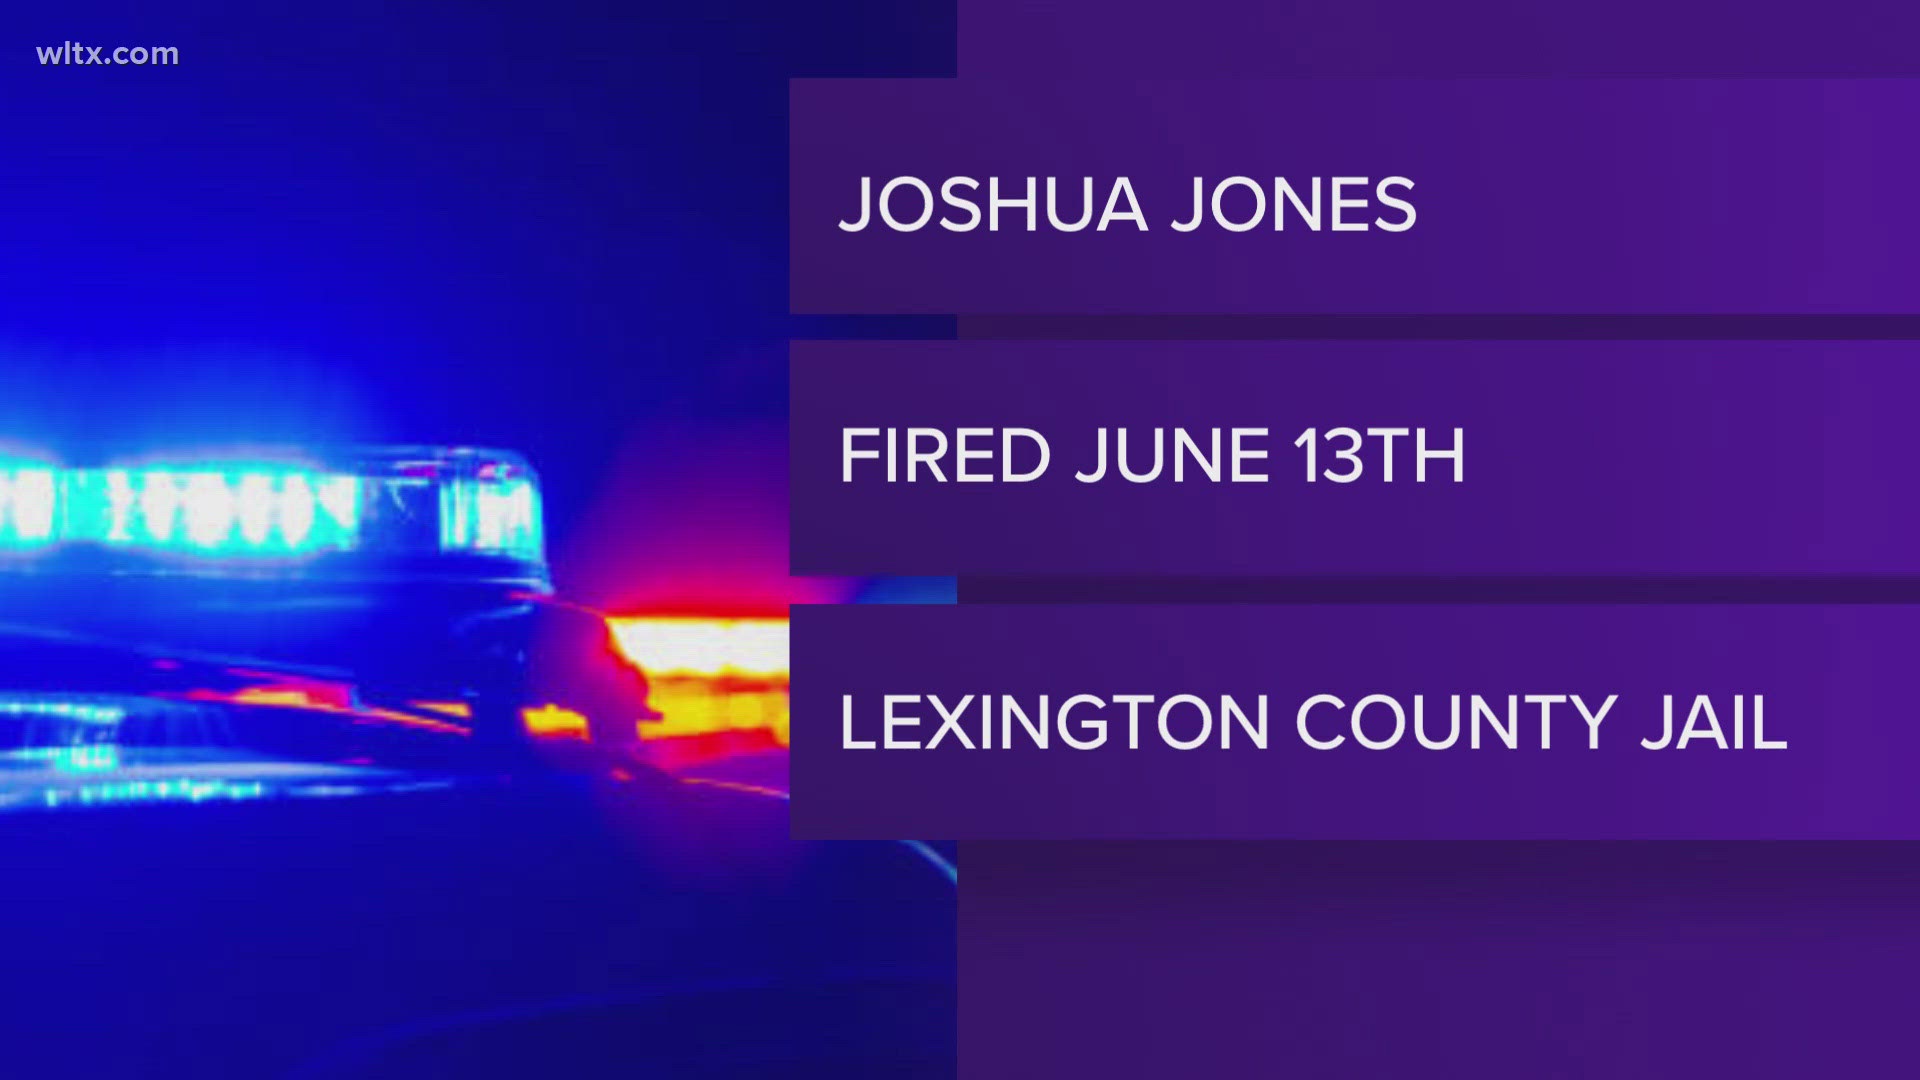 Joshua Jones, 33, was booked into the Lexington County jail Monday morning.